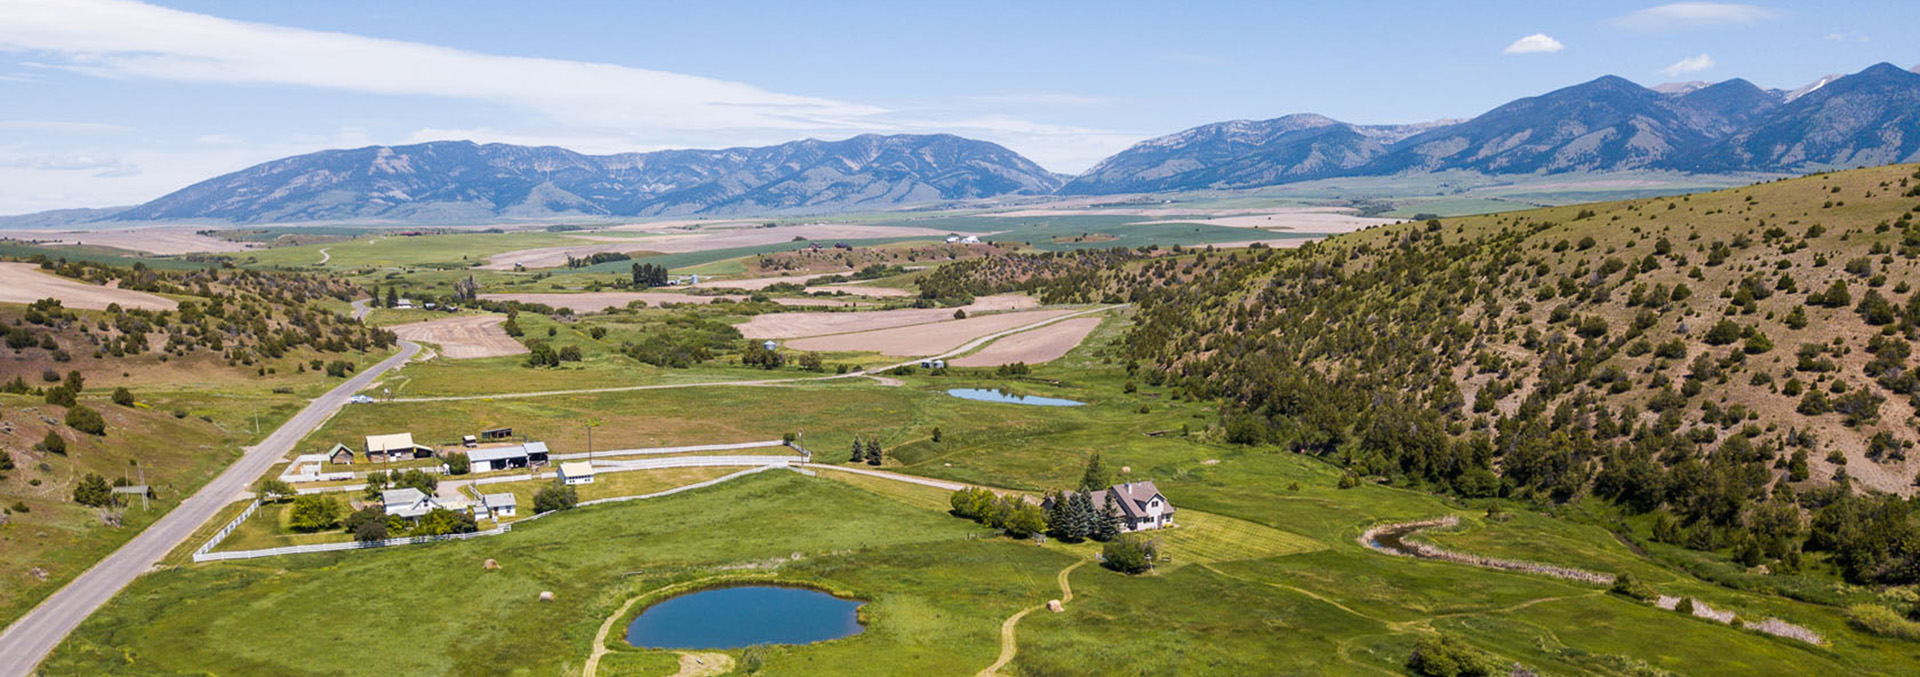 montana land for sale dry creek retreat